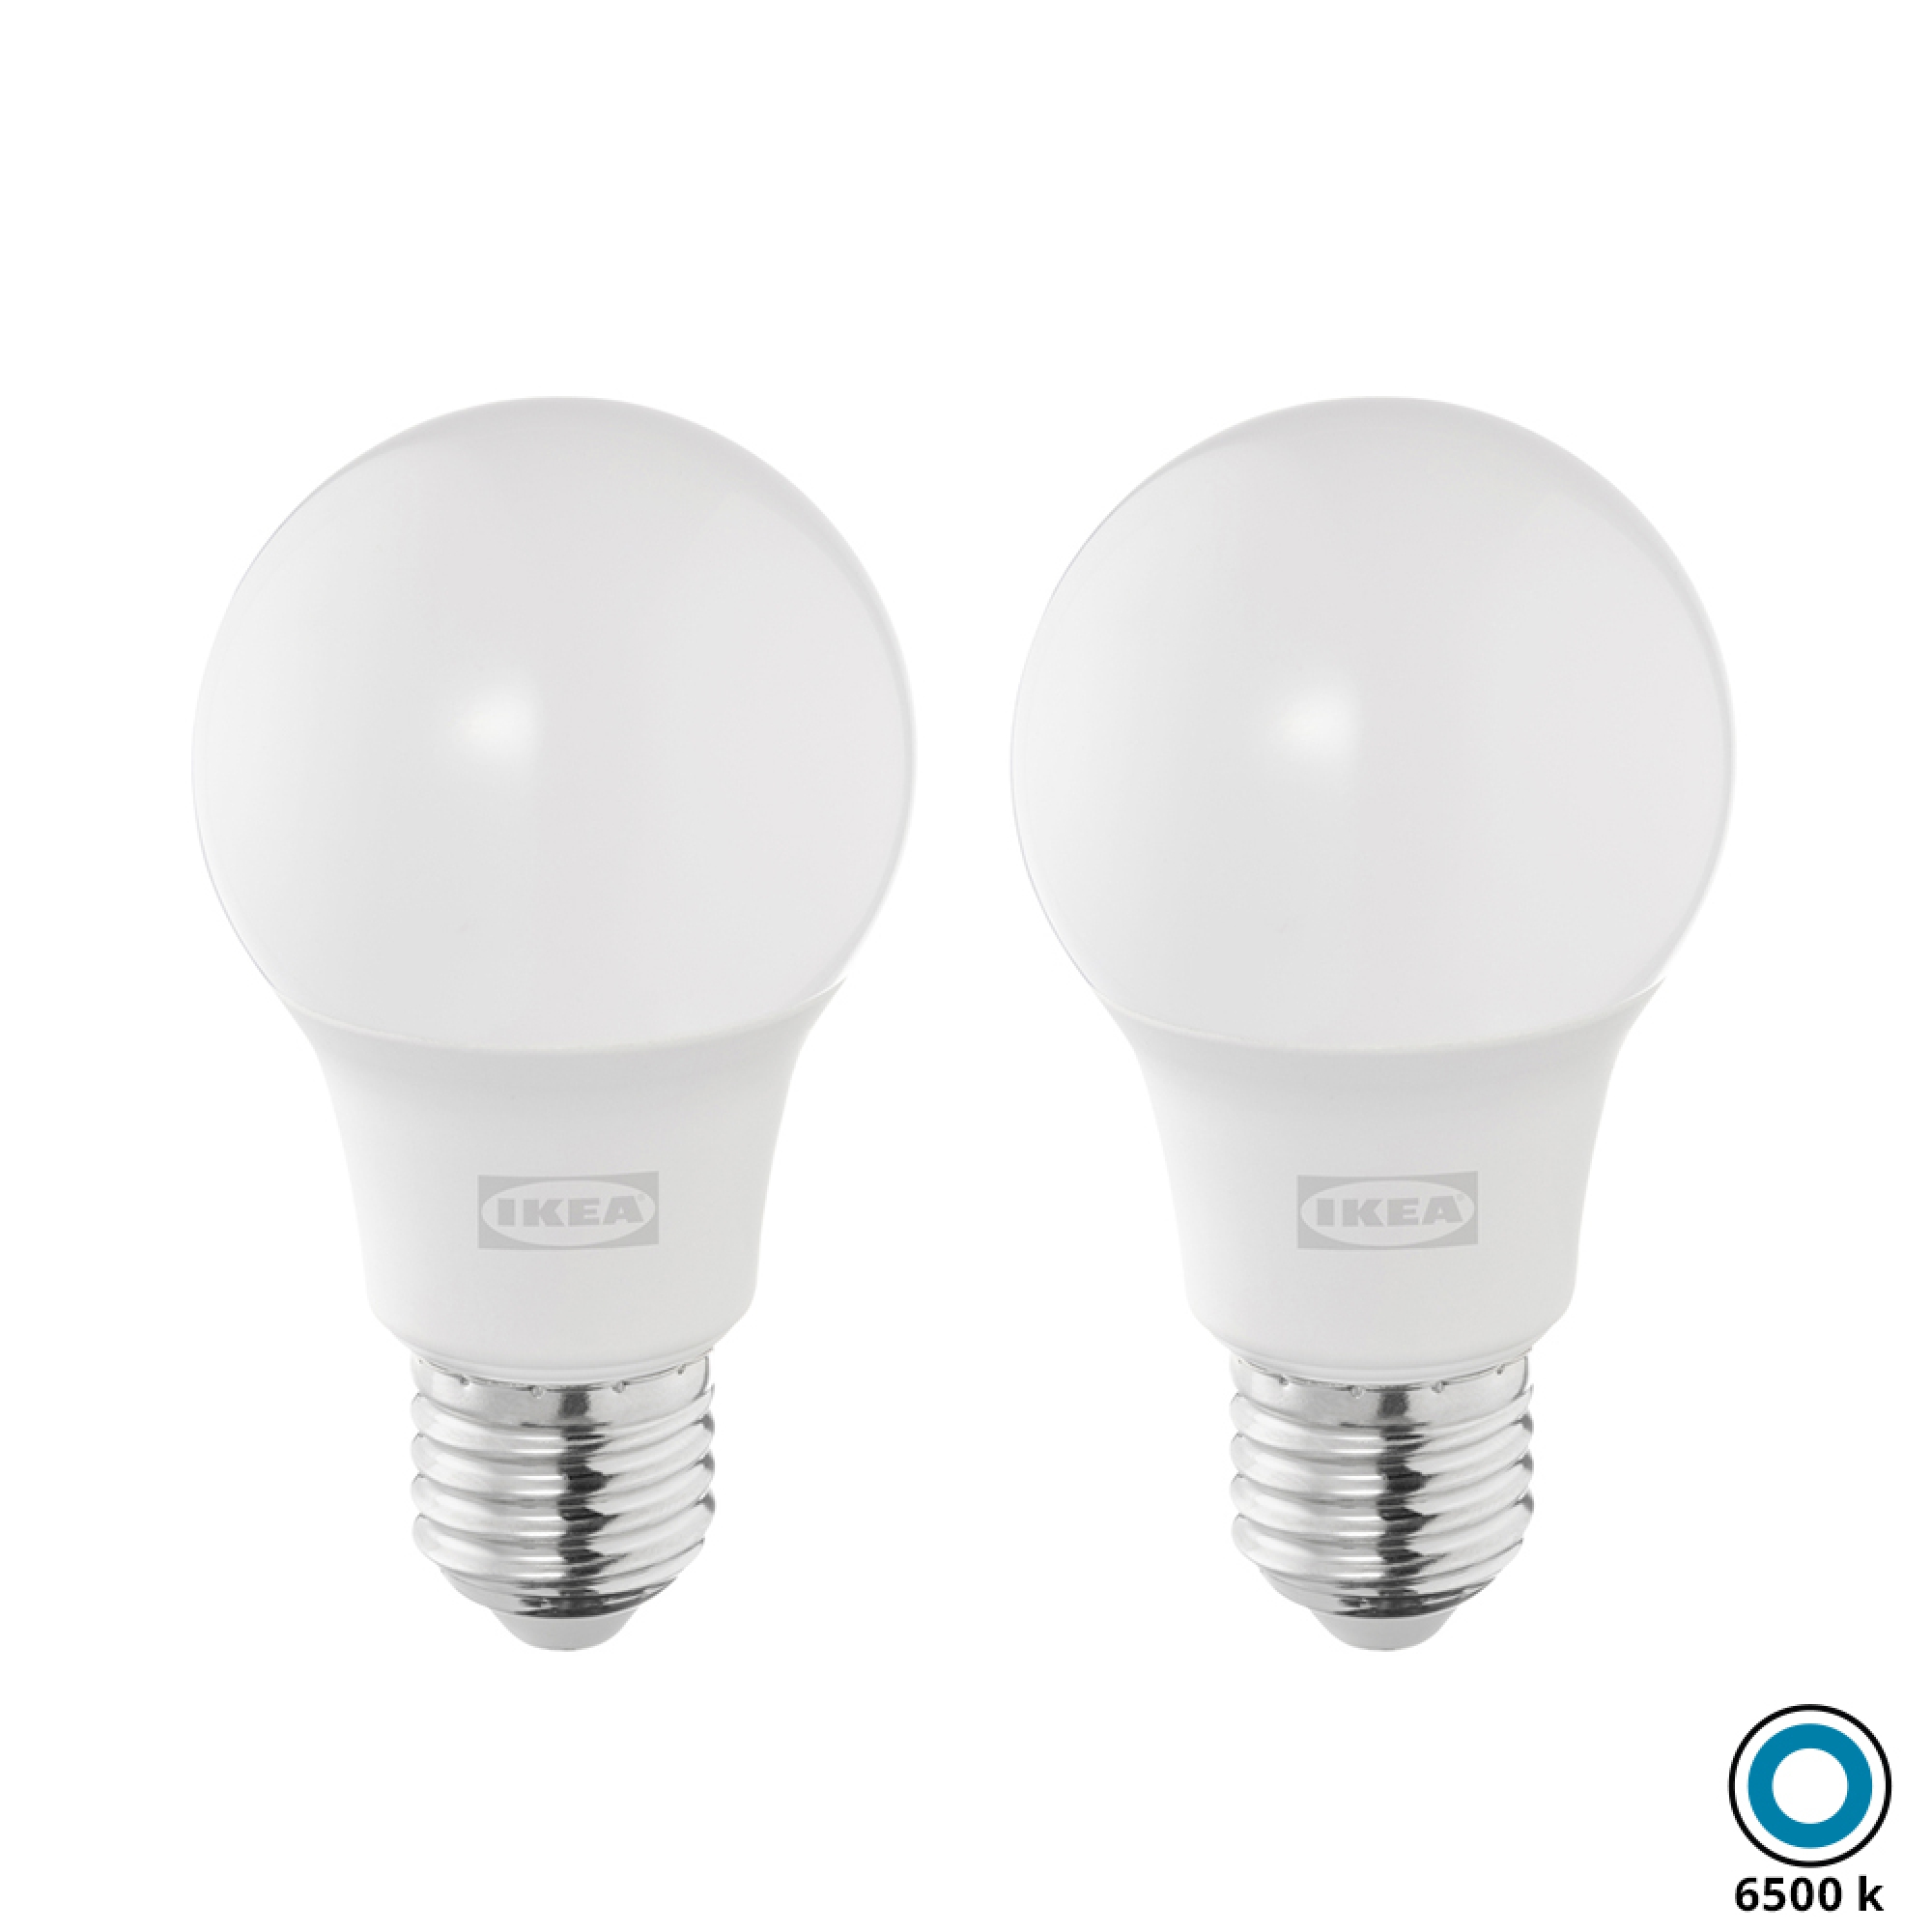 SOLHETTA LED bulb E27 806 lumen